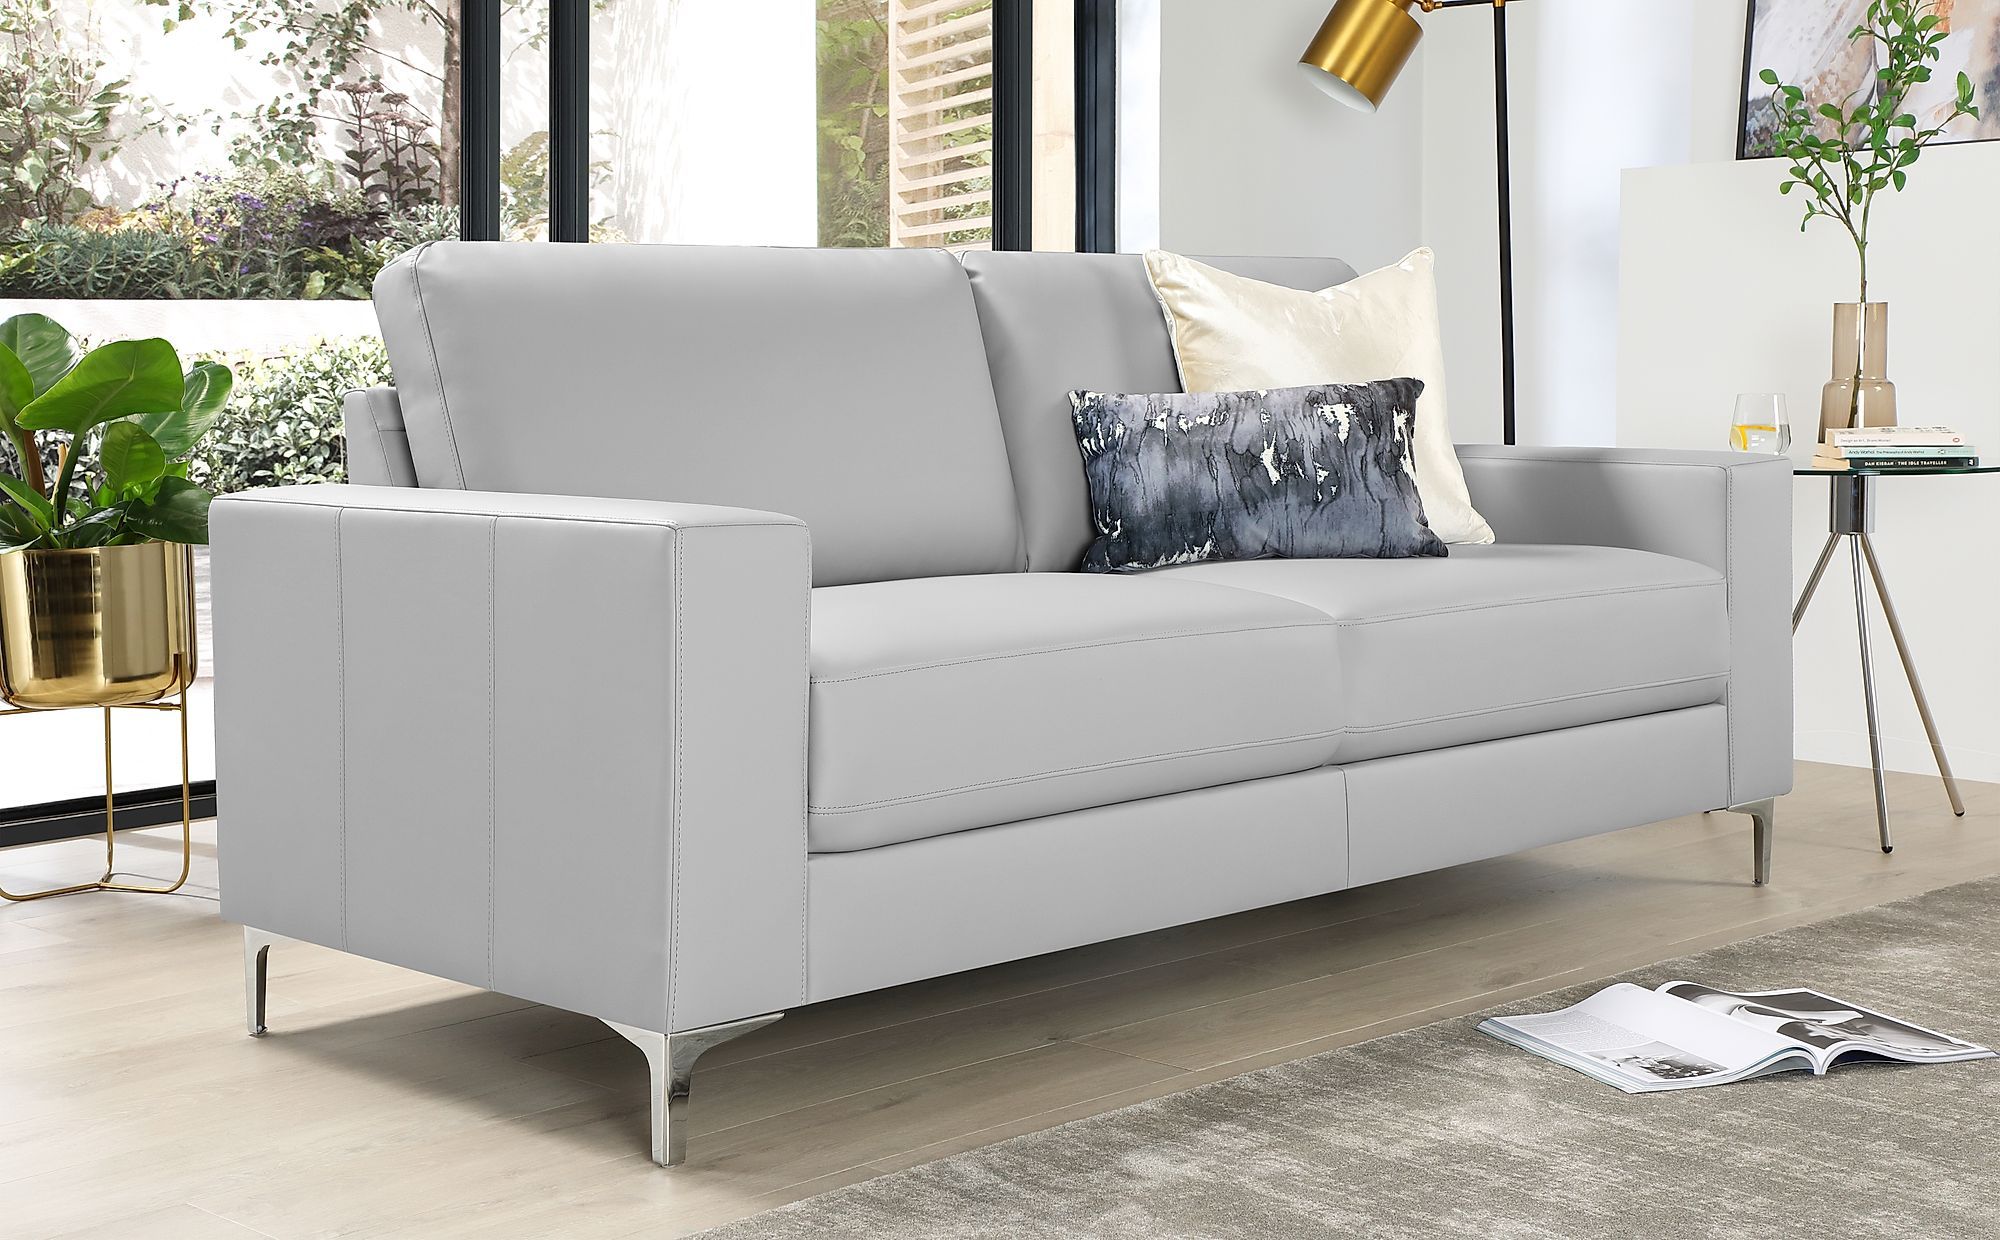 Baltimore Light Grey Leather 3 Seater Sofa | Furniture Choice Throughout Modern Light Grey Loveseat Sofas (View 4 of 20)